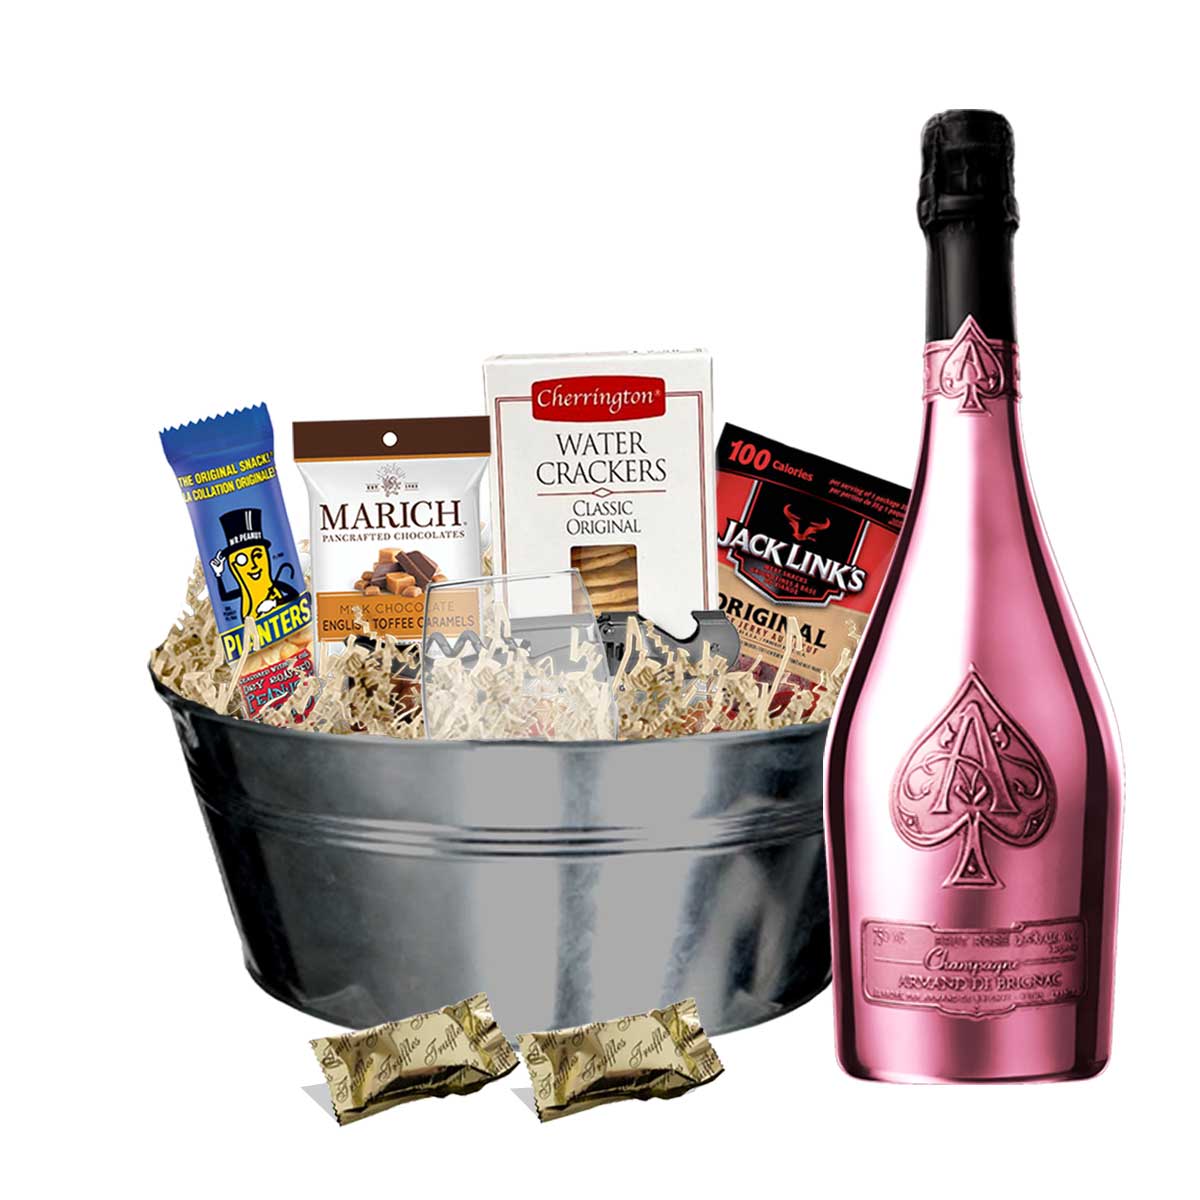 TAG Liquor Stores BC - Armand de Brignac Ace of Spades Brut Rose Champagne 750ml Gift Basket